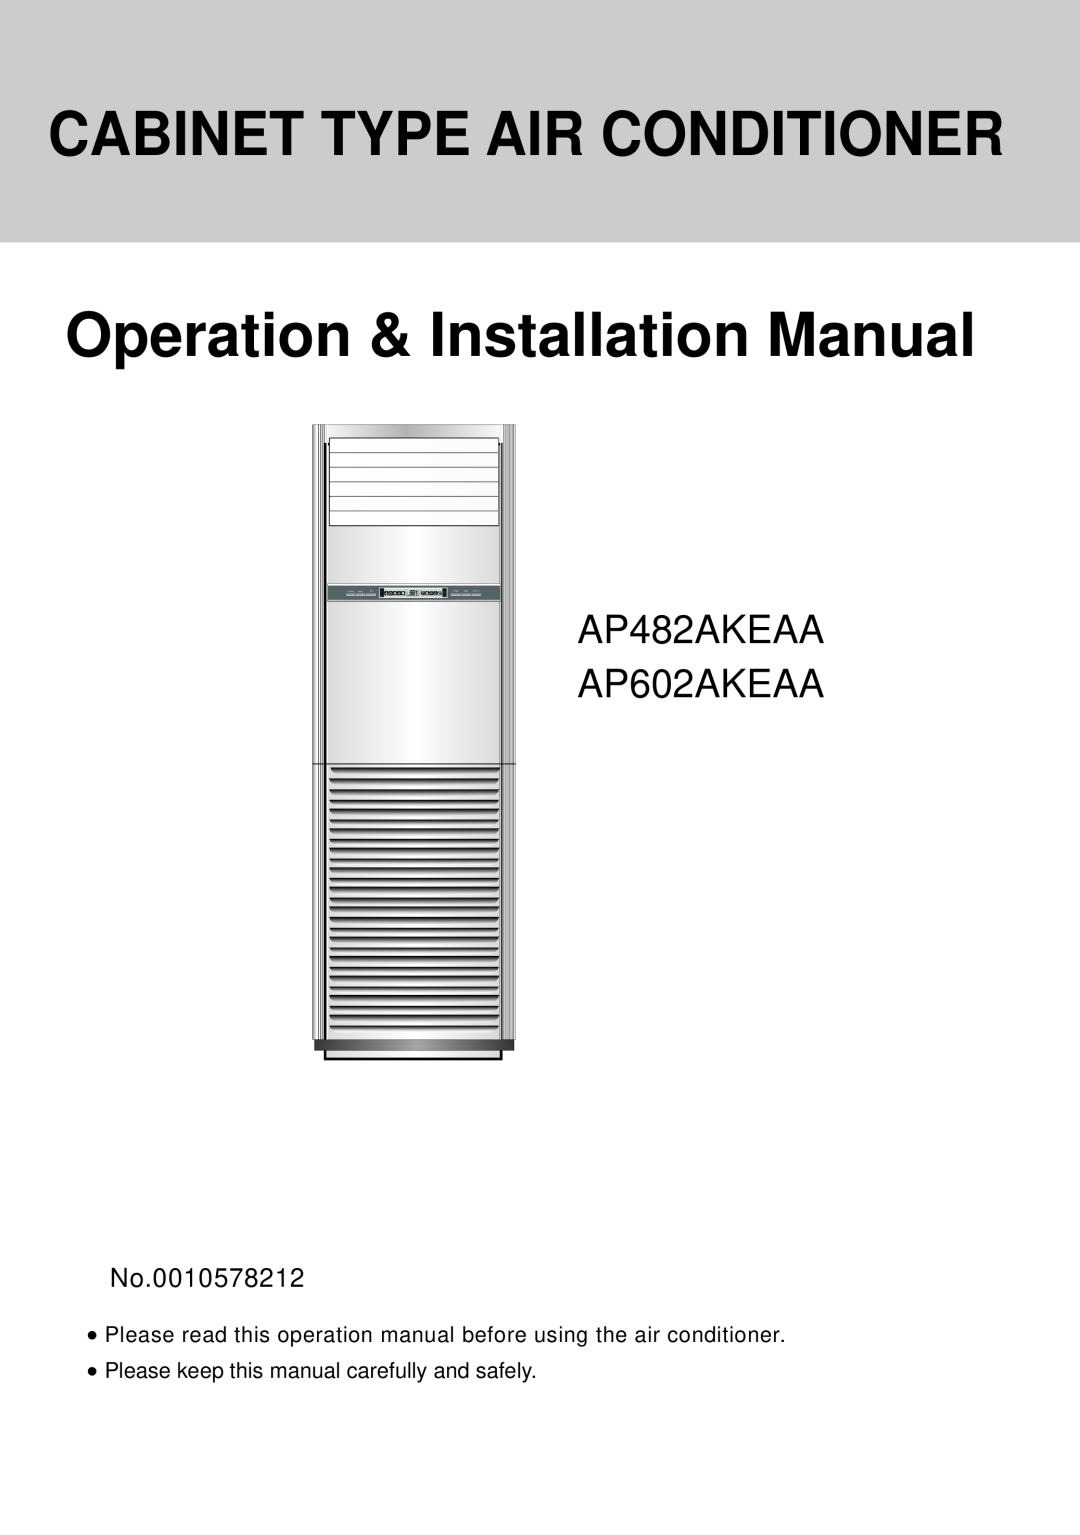 Haier installation manual AP482AKEAA AP602AKEAA, Cabinet Type Air Conditioner, Operation & Installation Manual 